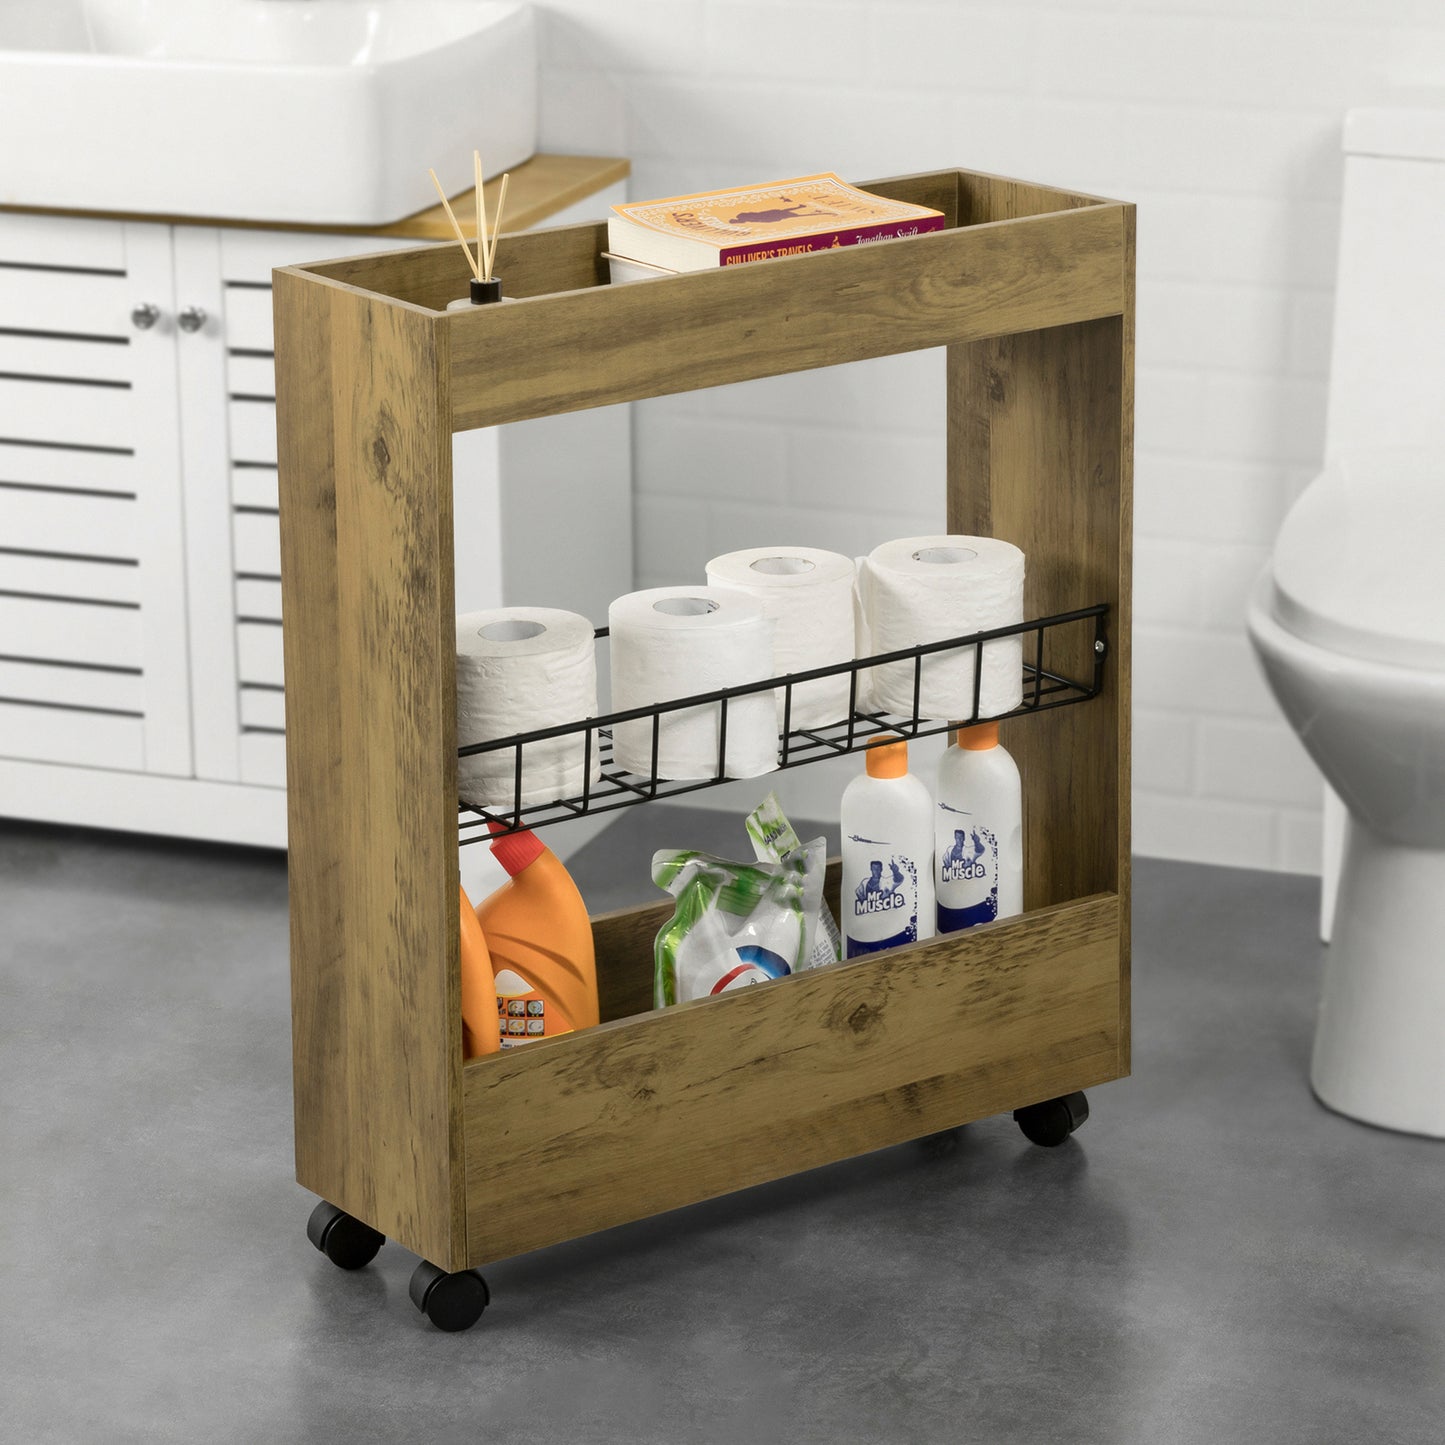 SoBuy Bathroom Toilet Paper Roll Holder, Narrow Bathroom Shelf on Wheels, 3 Tiers Mobile Storage Shelf Rack